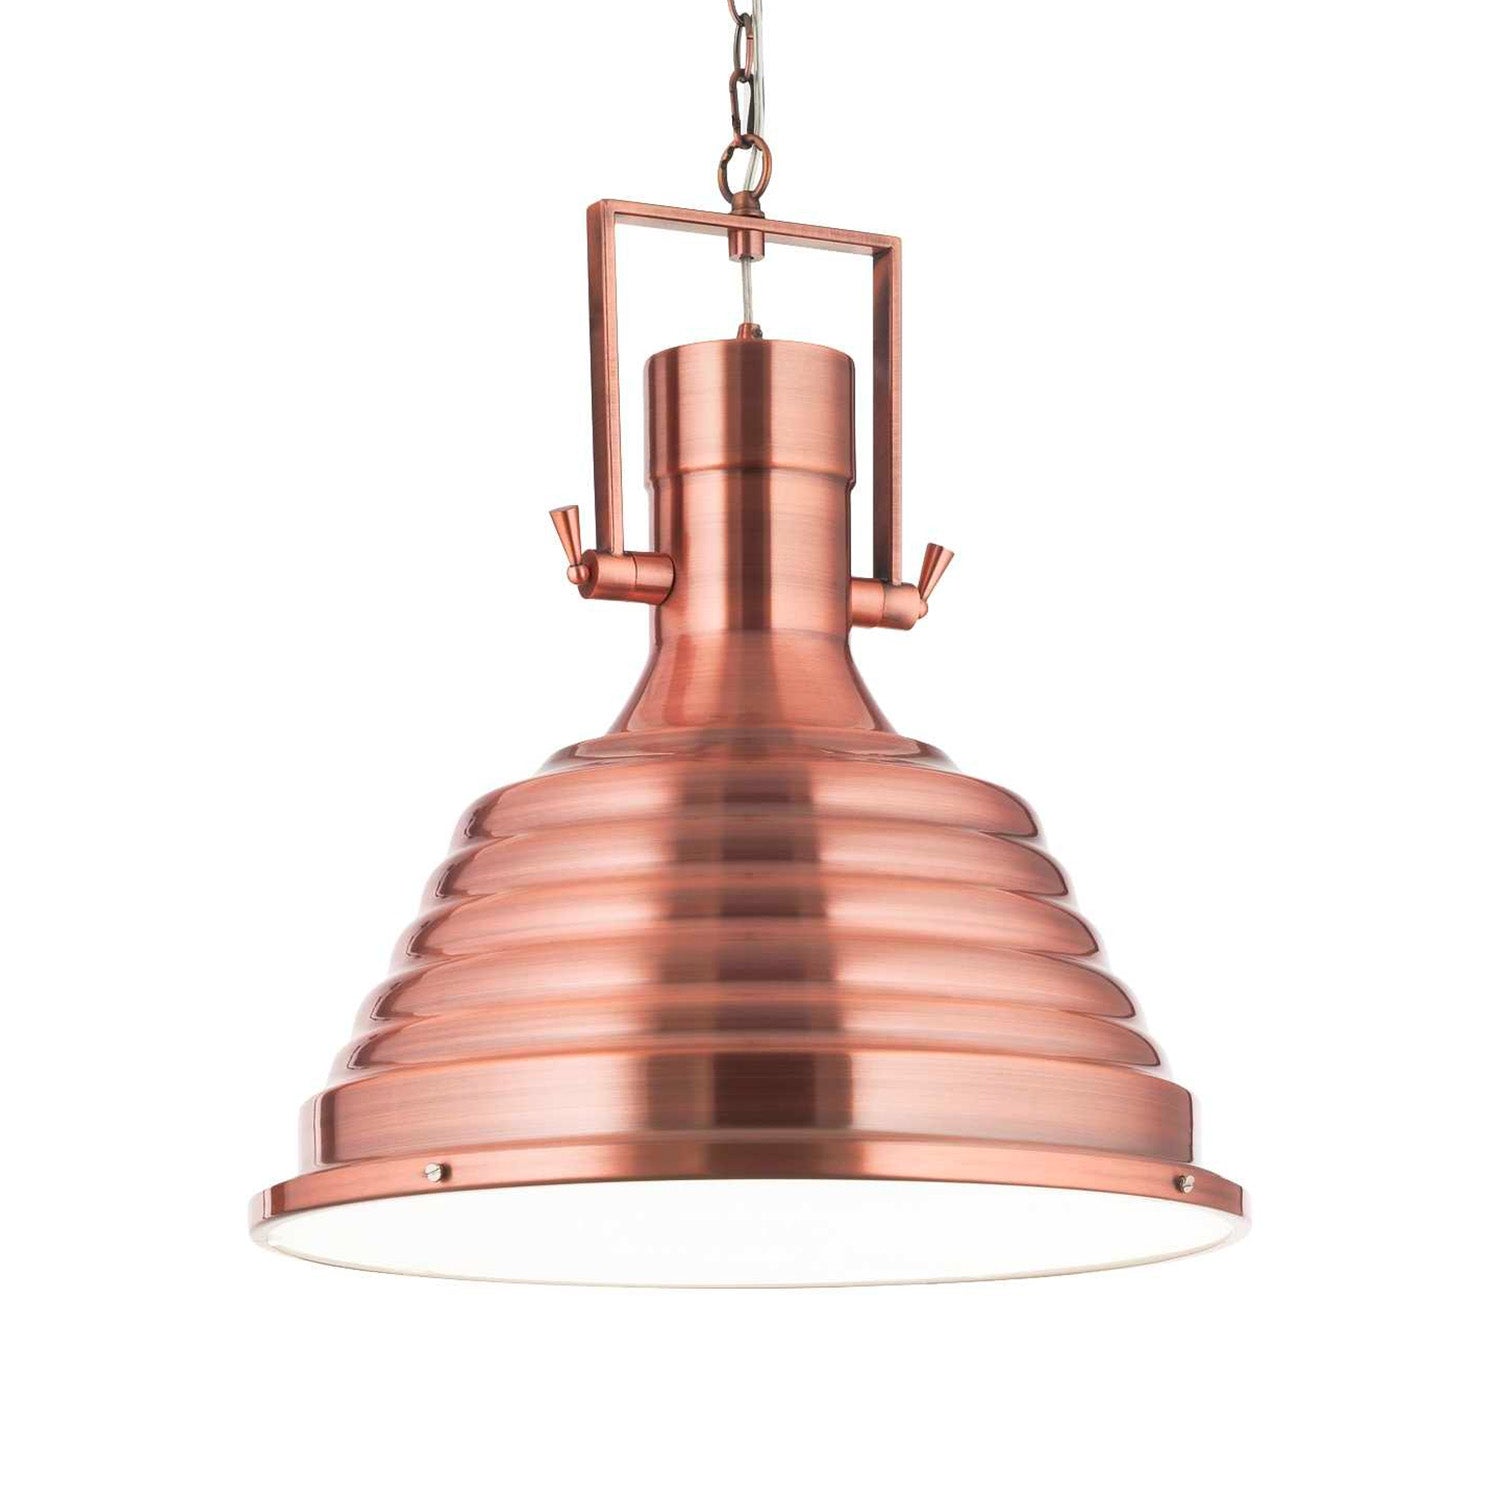 FISHERMAN - Industrial copper or black pendant light